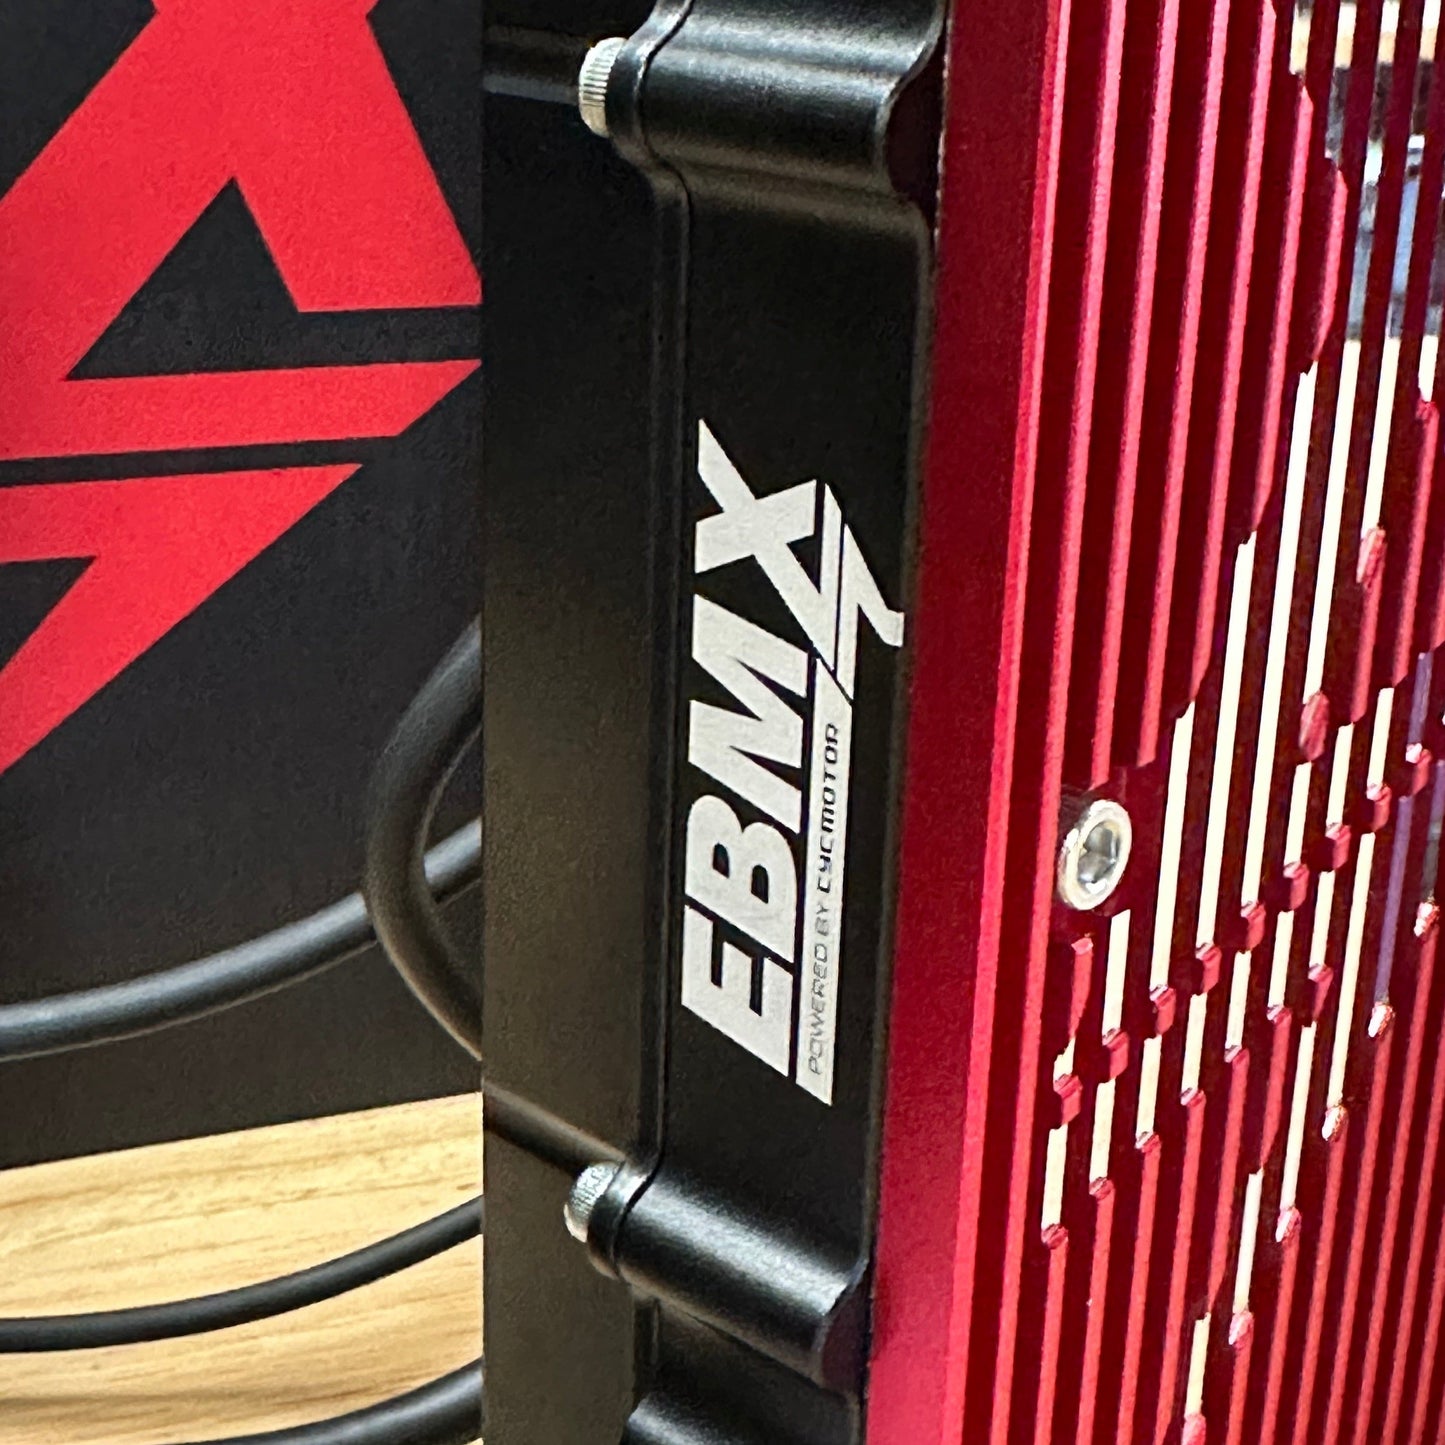 EBMX X-9000 V2 Controller Kit for Sur Ron, Segway, 79bike & Talaria